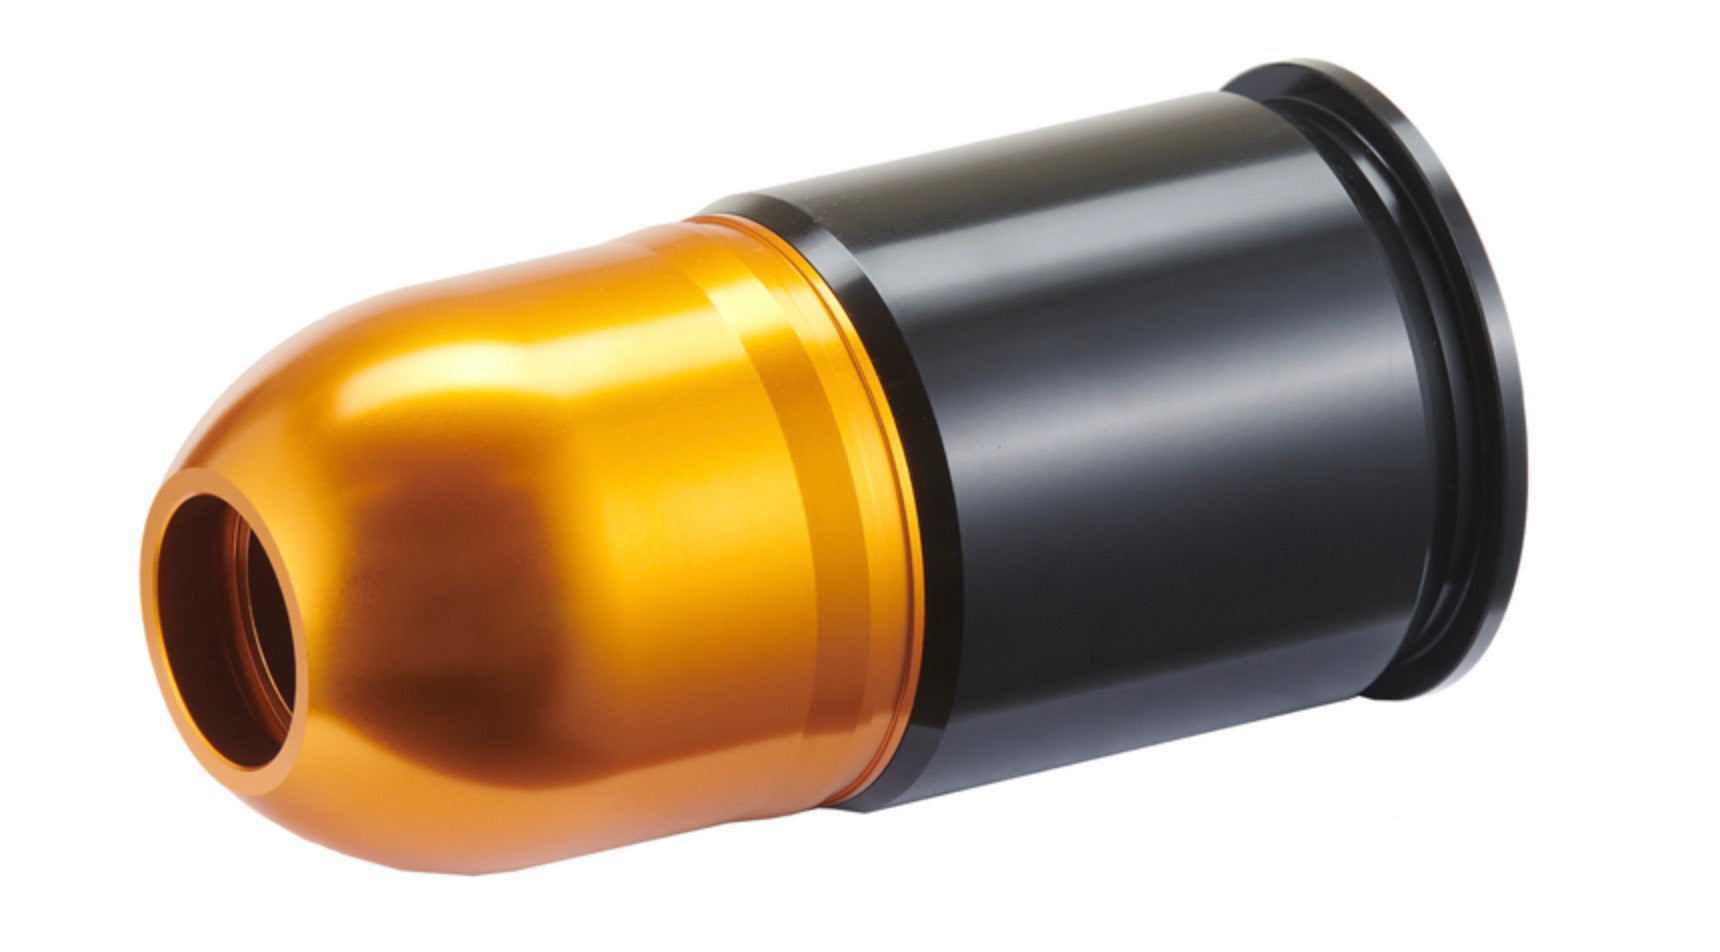 Lancer Tactical 40mm Aluminum Green Gas Grenade Shell (Color: Gold / Black)